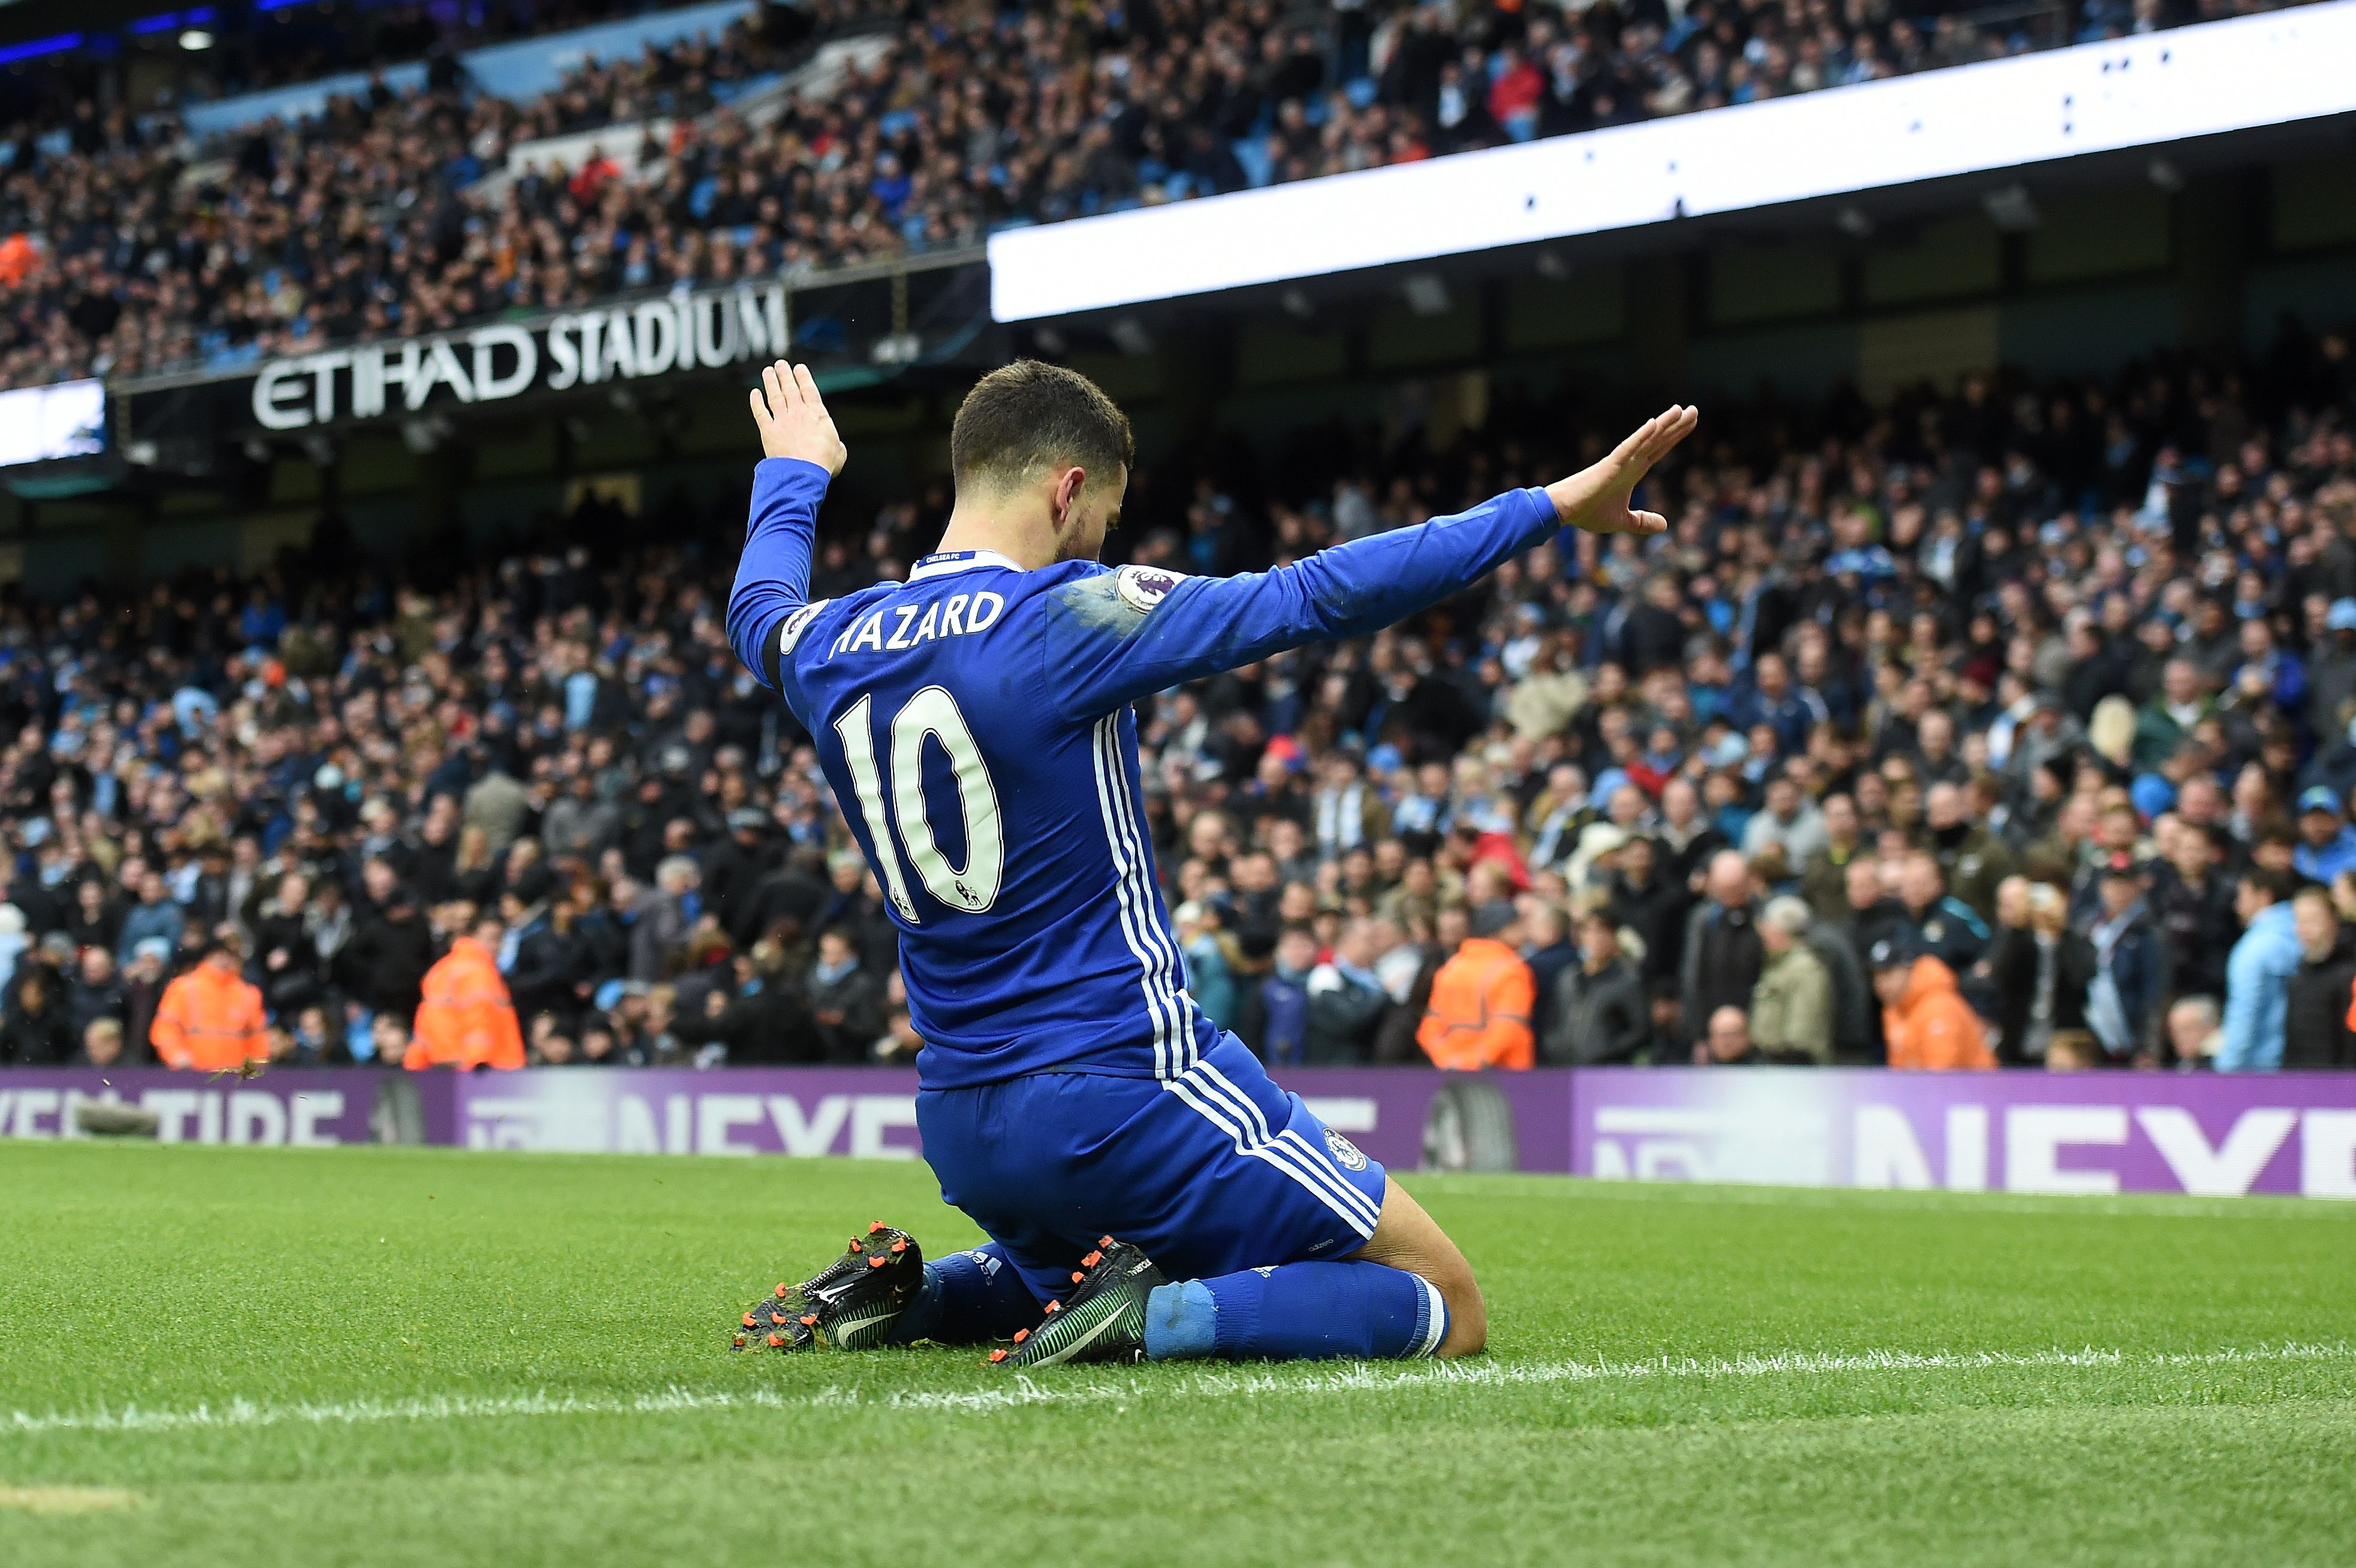 Back to his best - Eden Hazard has re-established himself as Chlesea's talisman this season. (Photo courtesy - Paul Ellis/AFP/Getty Images)